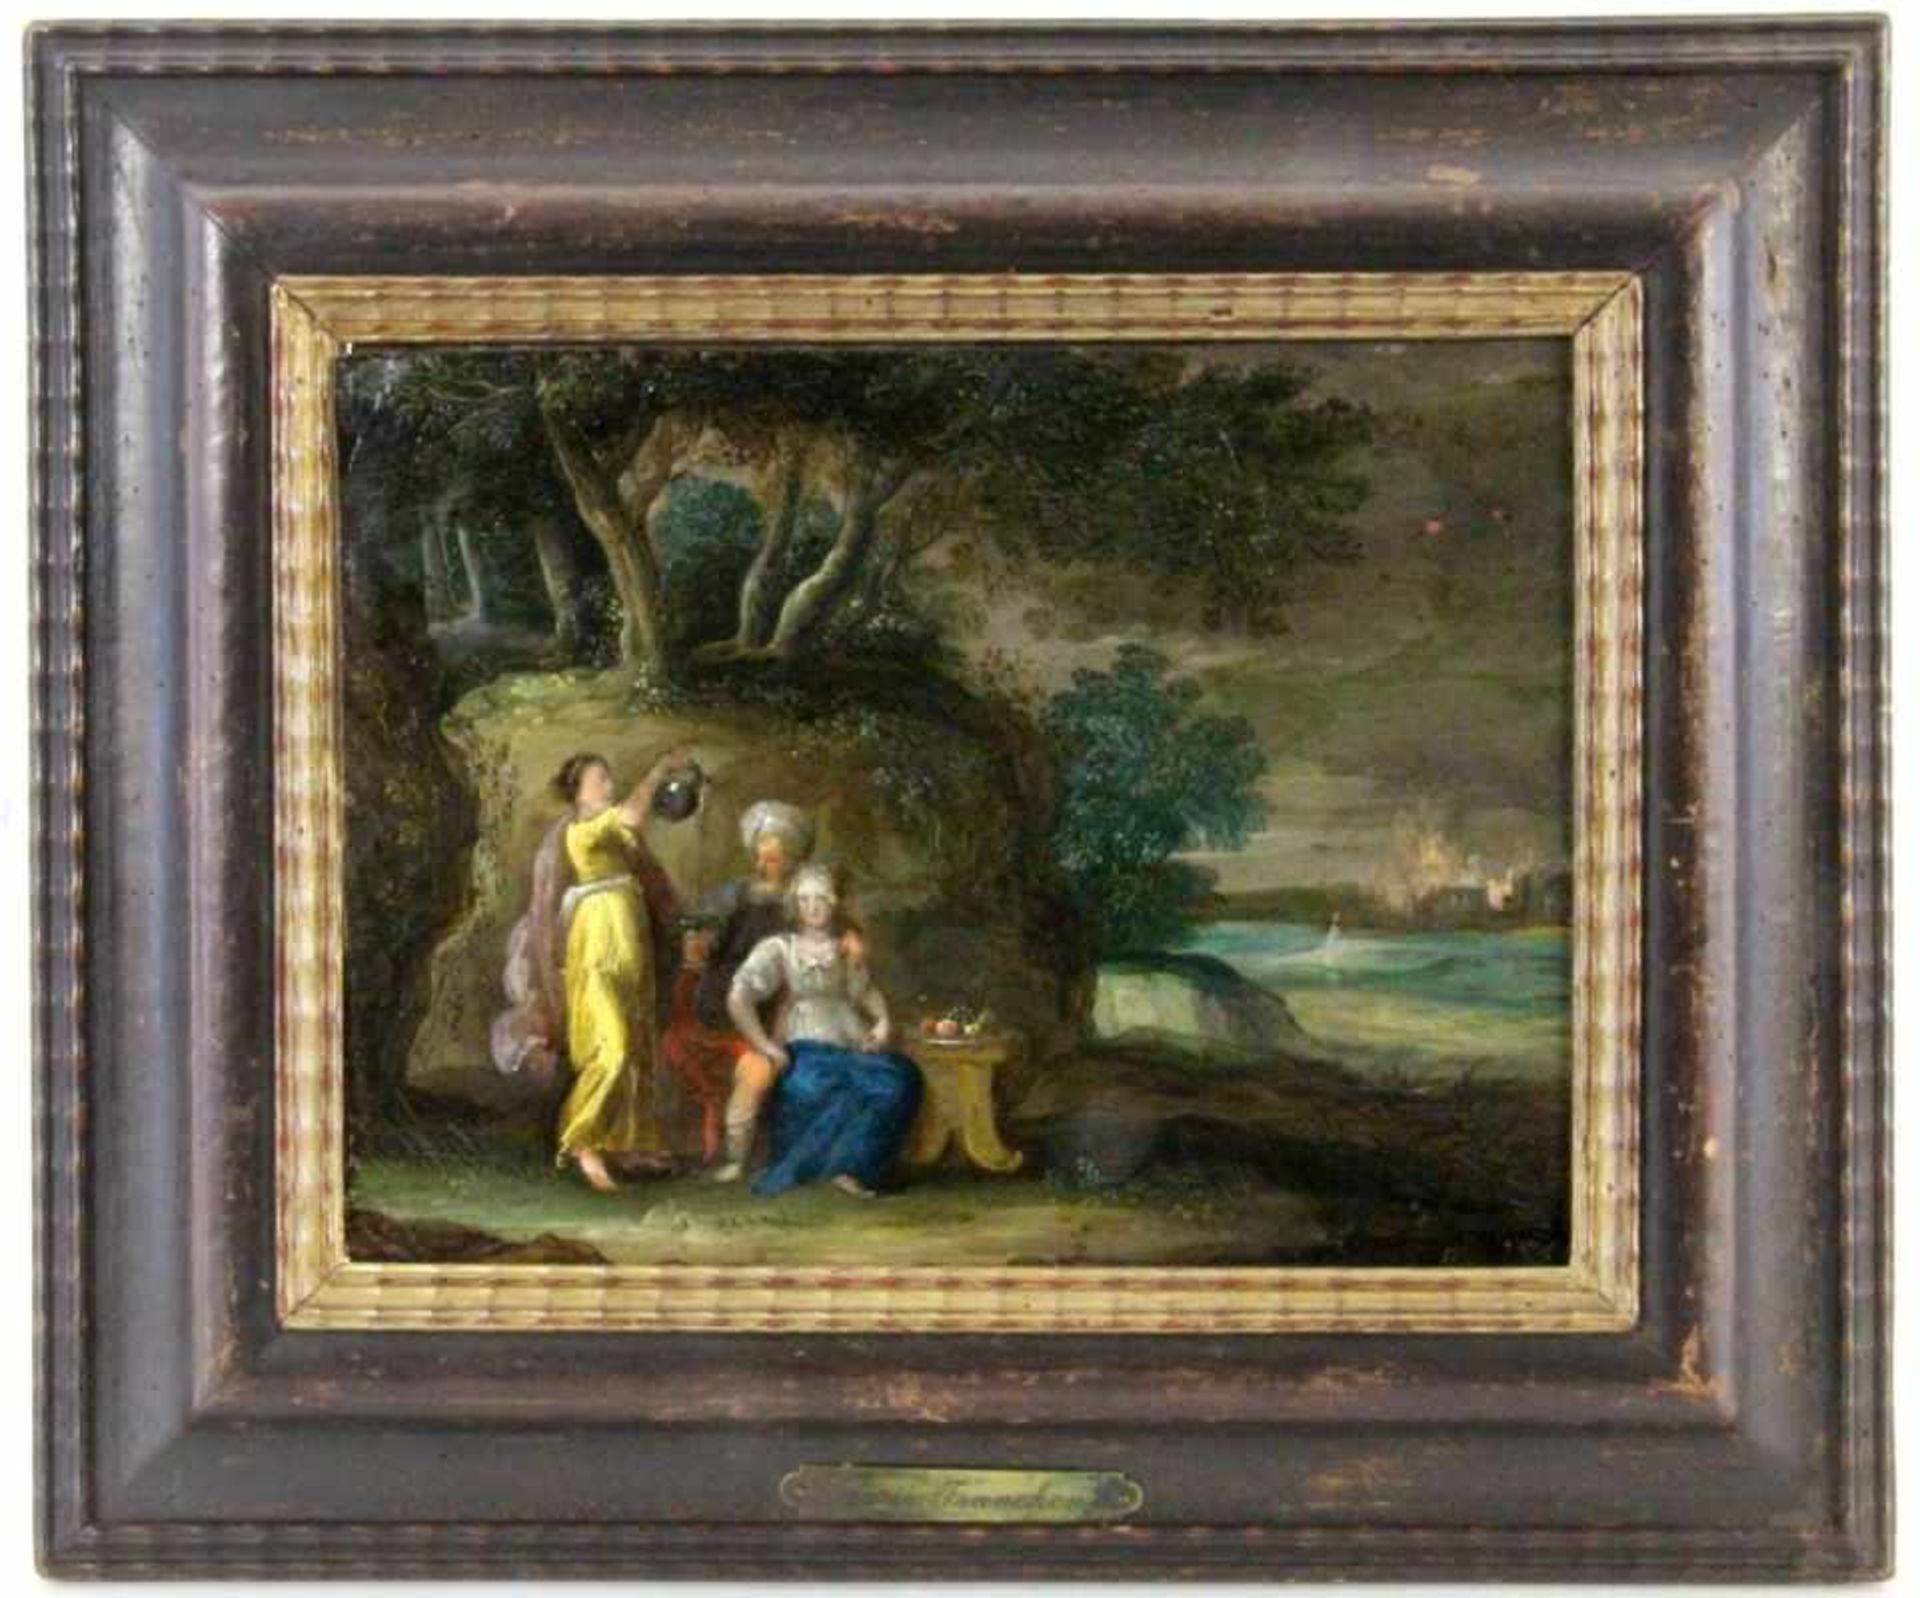 ''(Attributed to) FRANCKEN, FRANS II Antwerpen 1581 - 1642 Biblical scene. Oil on copper,